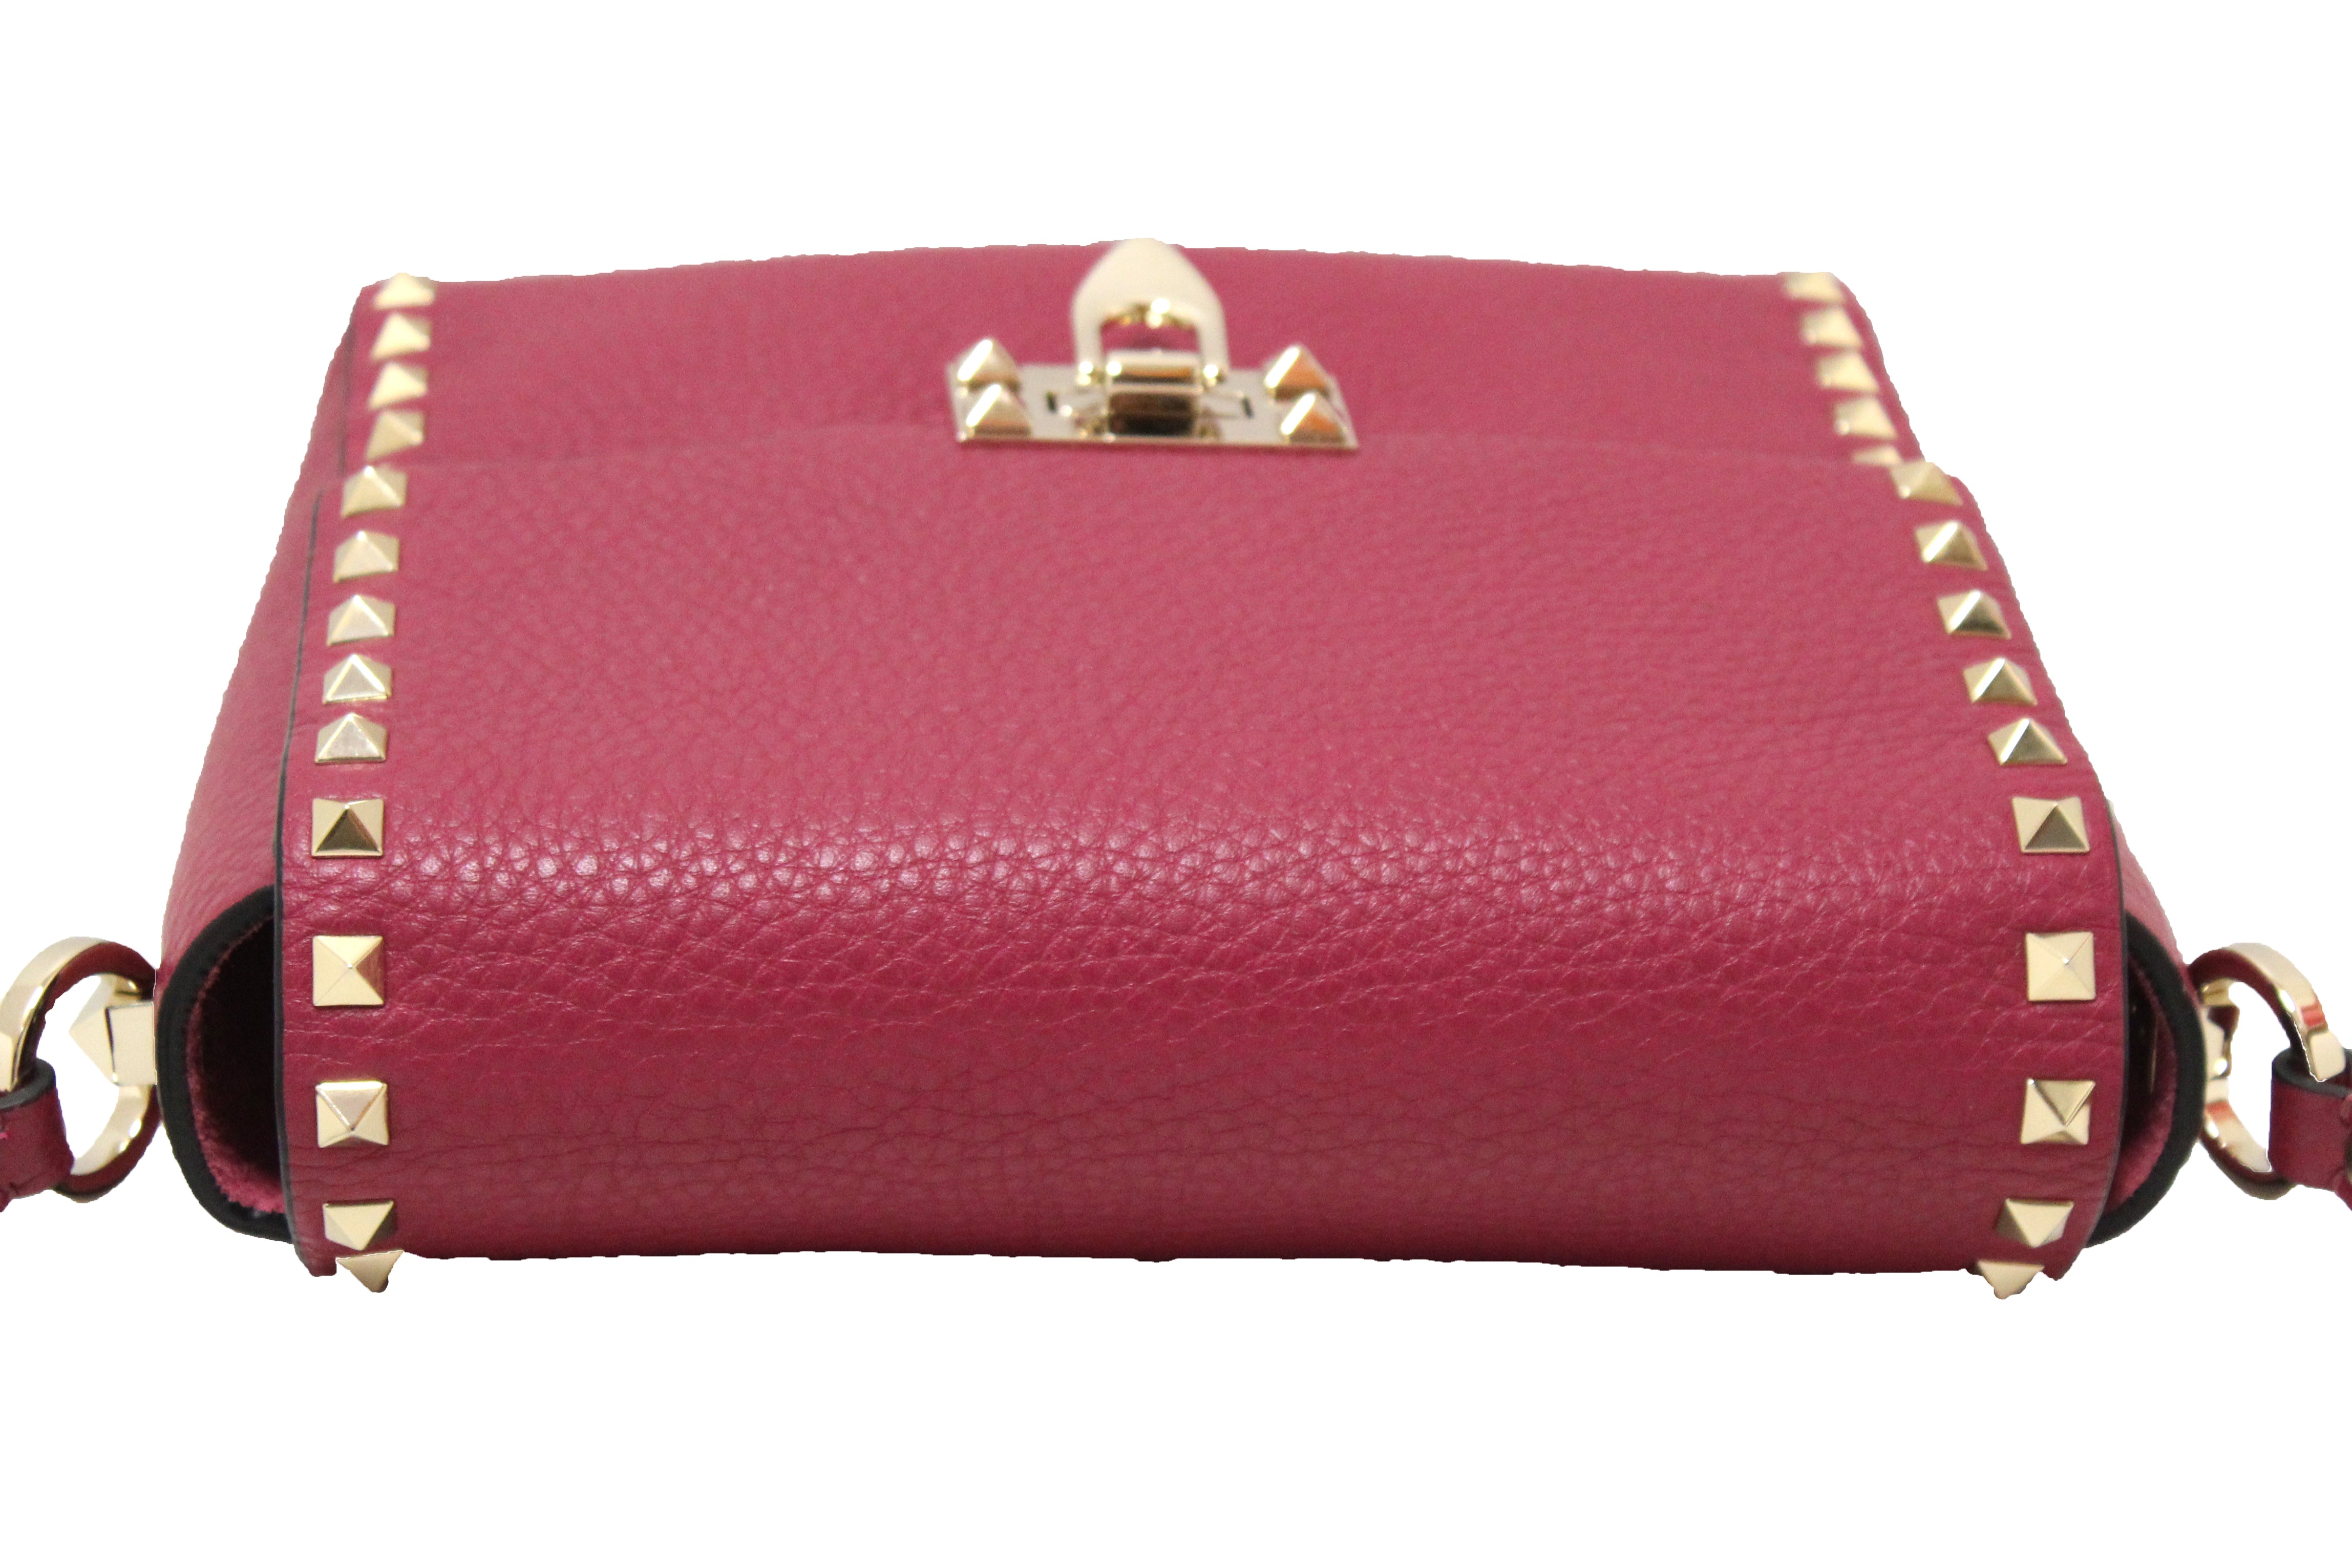 Valentino Garavani Pink Small Rockstud Crossbody Bag